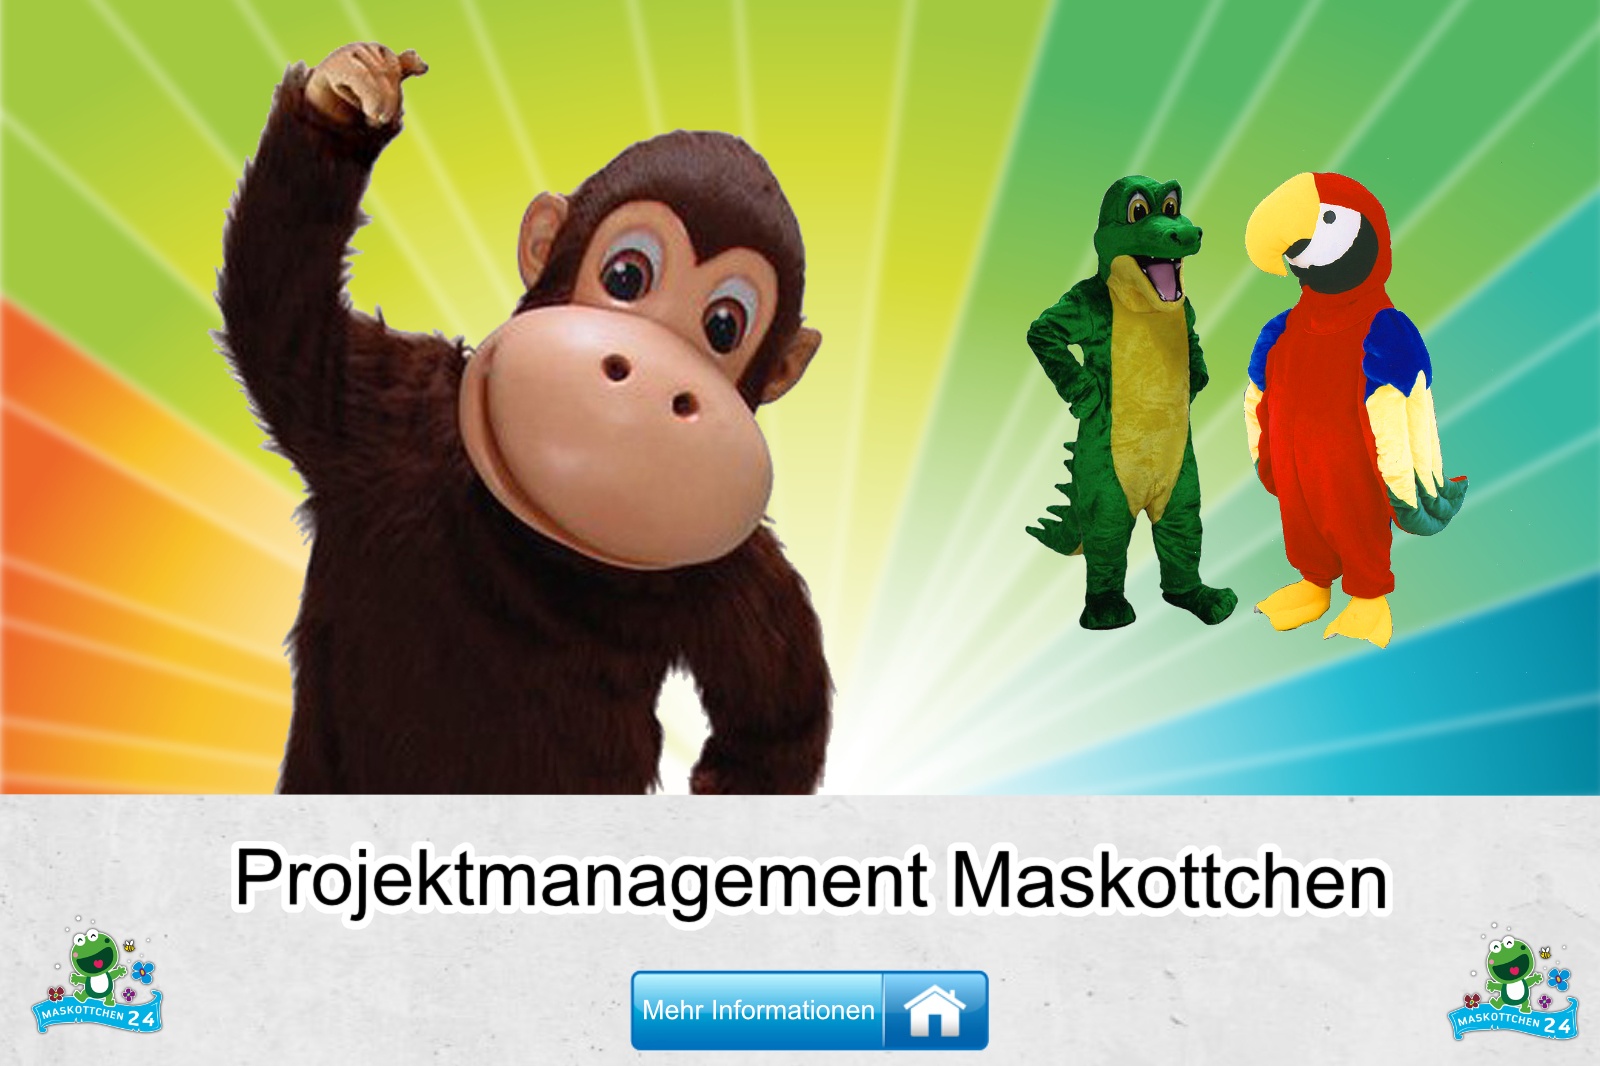 Projektmanagement-Kostueme-Maskottchen-Karneval-Produktion-Firma-Bau